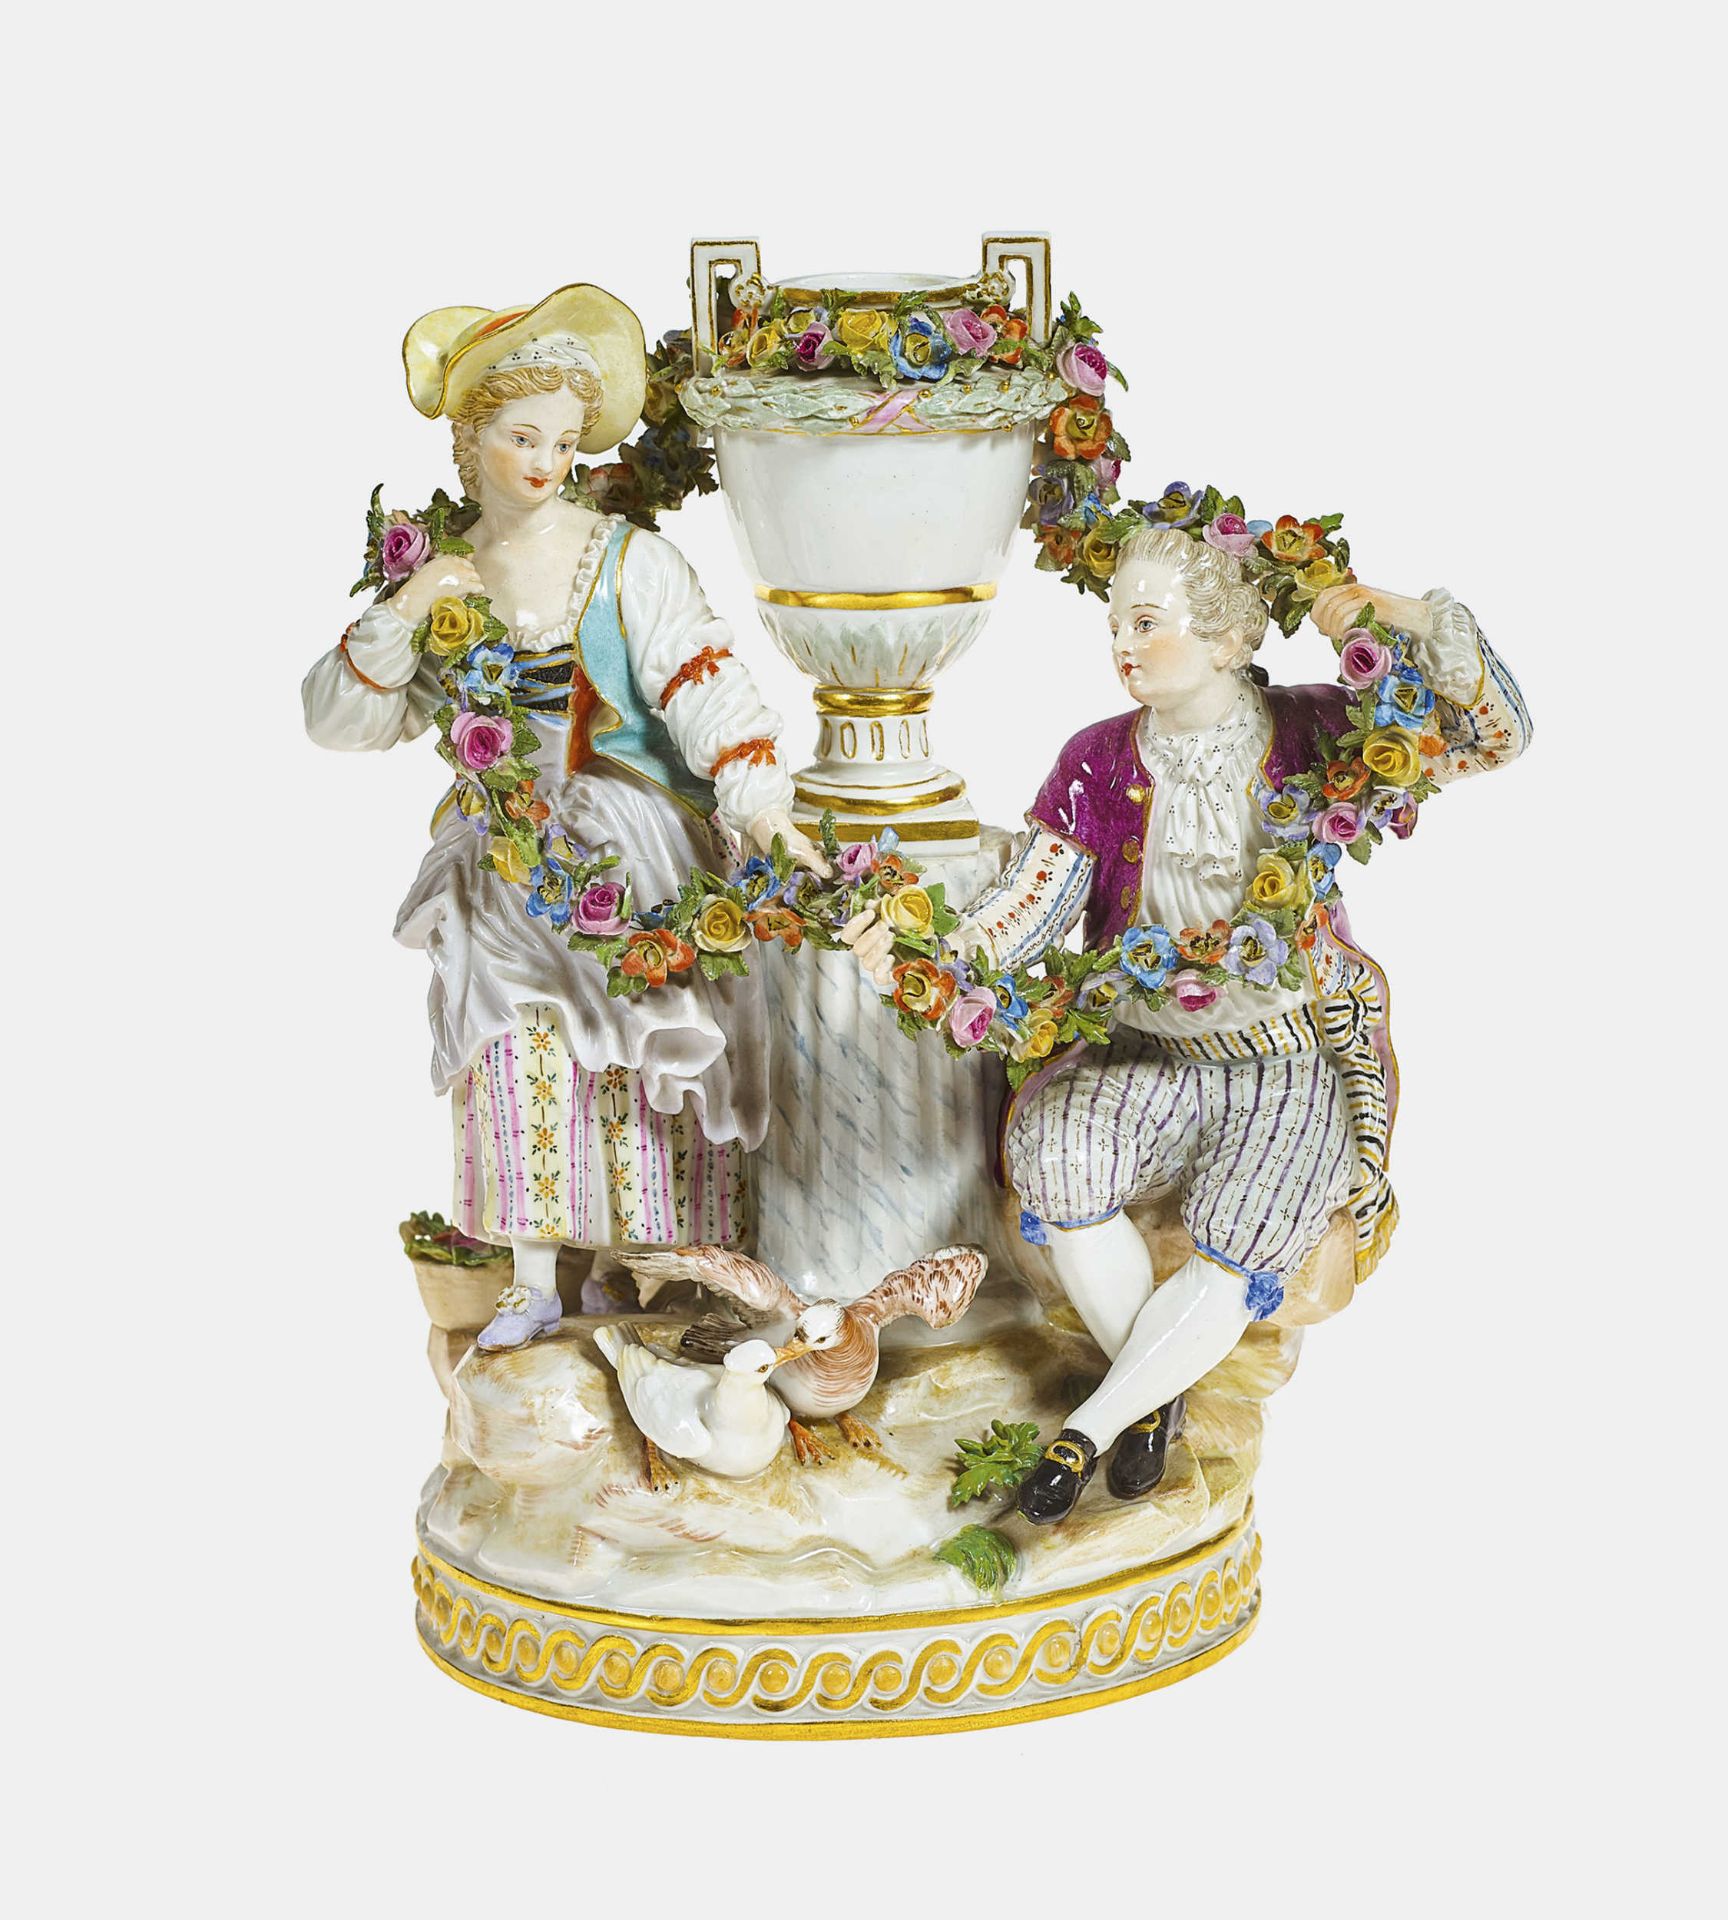 FIGURENGRUPPEMeissen, um 1870 (Königliche Porzellan Manufaktur).Liebesgruppe.Porzellan, polychrom